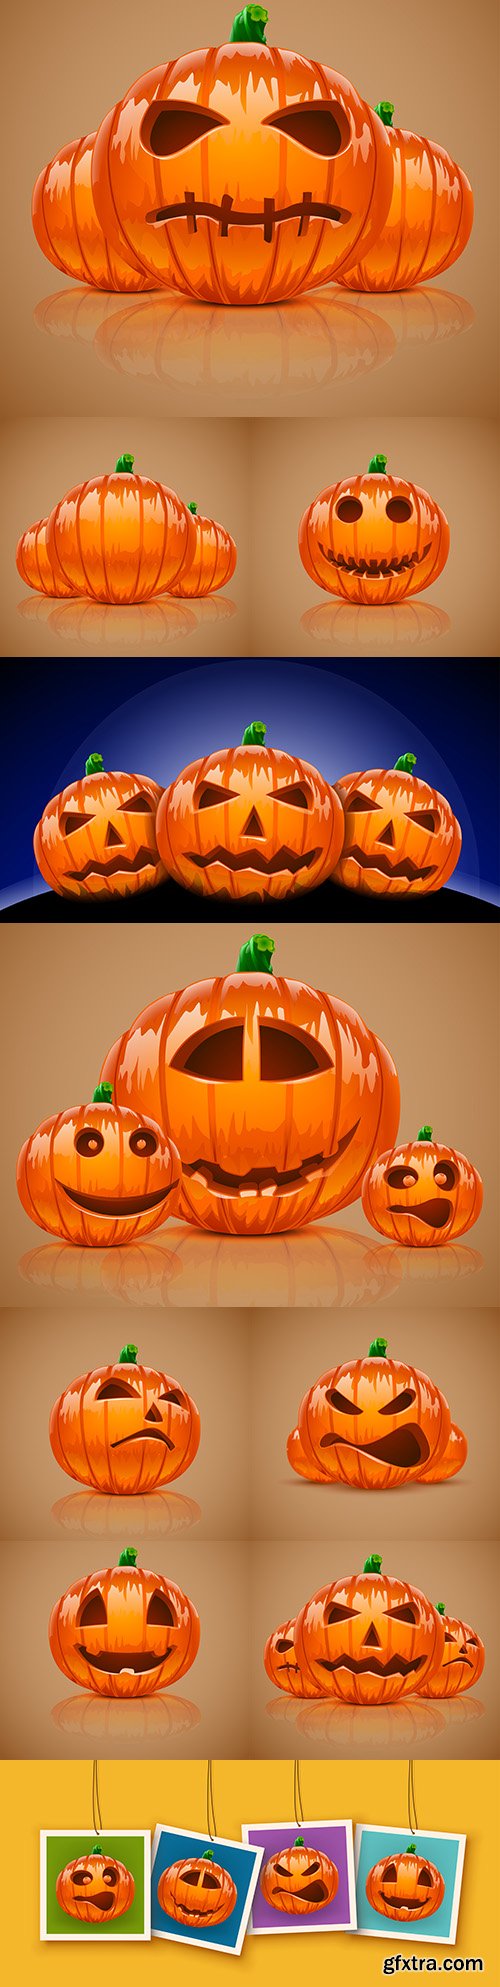 Halloween orange Pumpkin cartoon emotions illustration